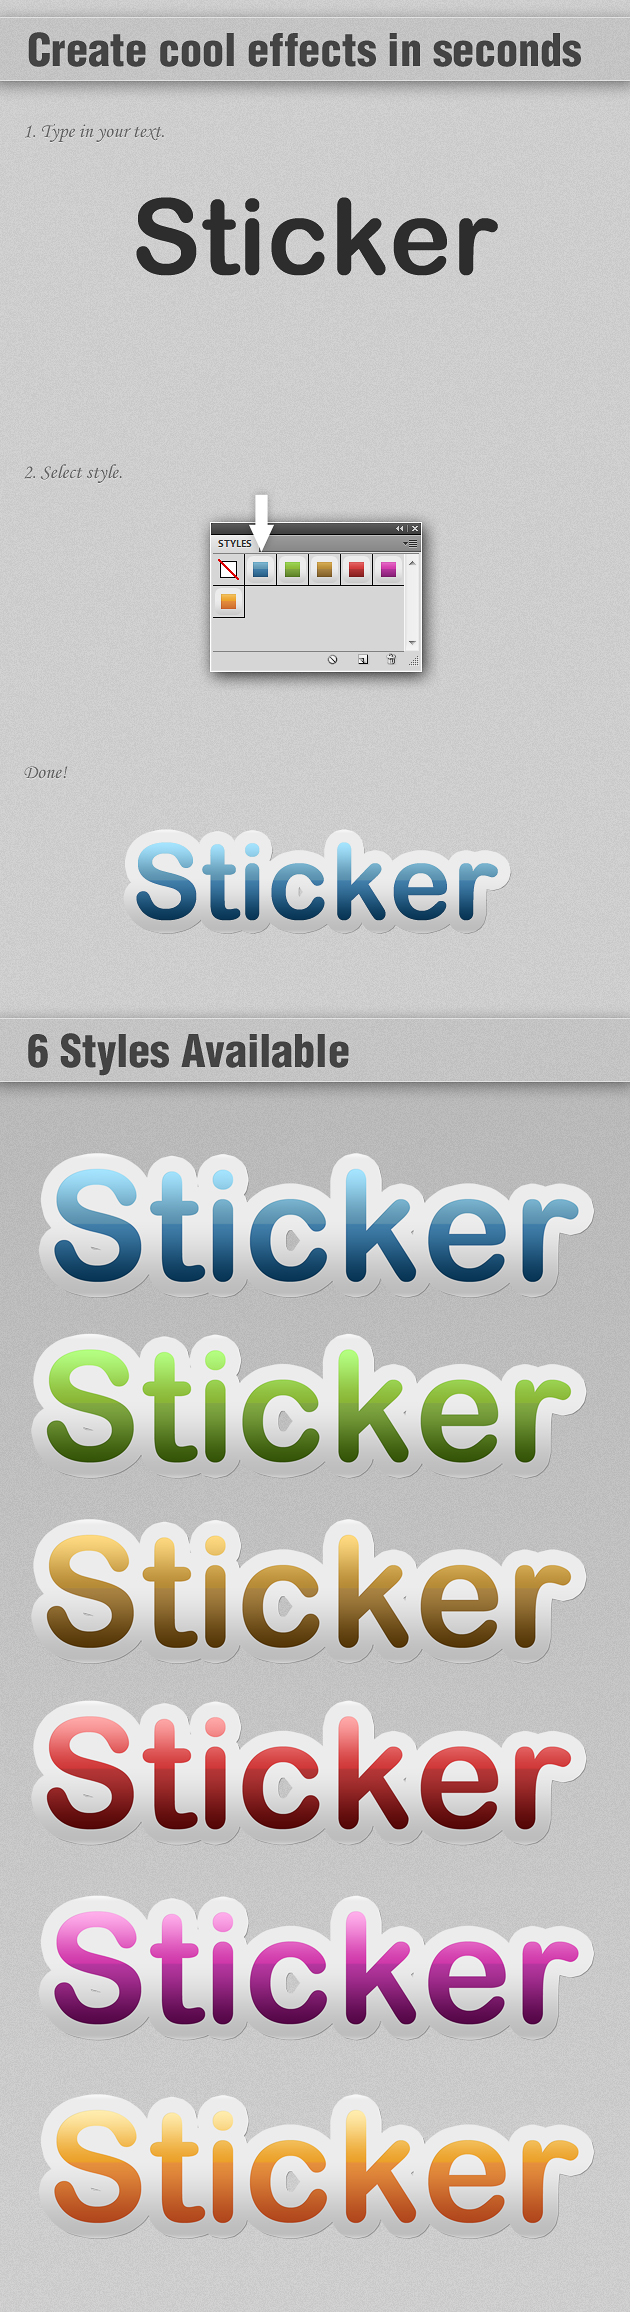 Free Sticker Photoshop Text Styles 2